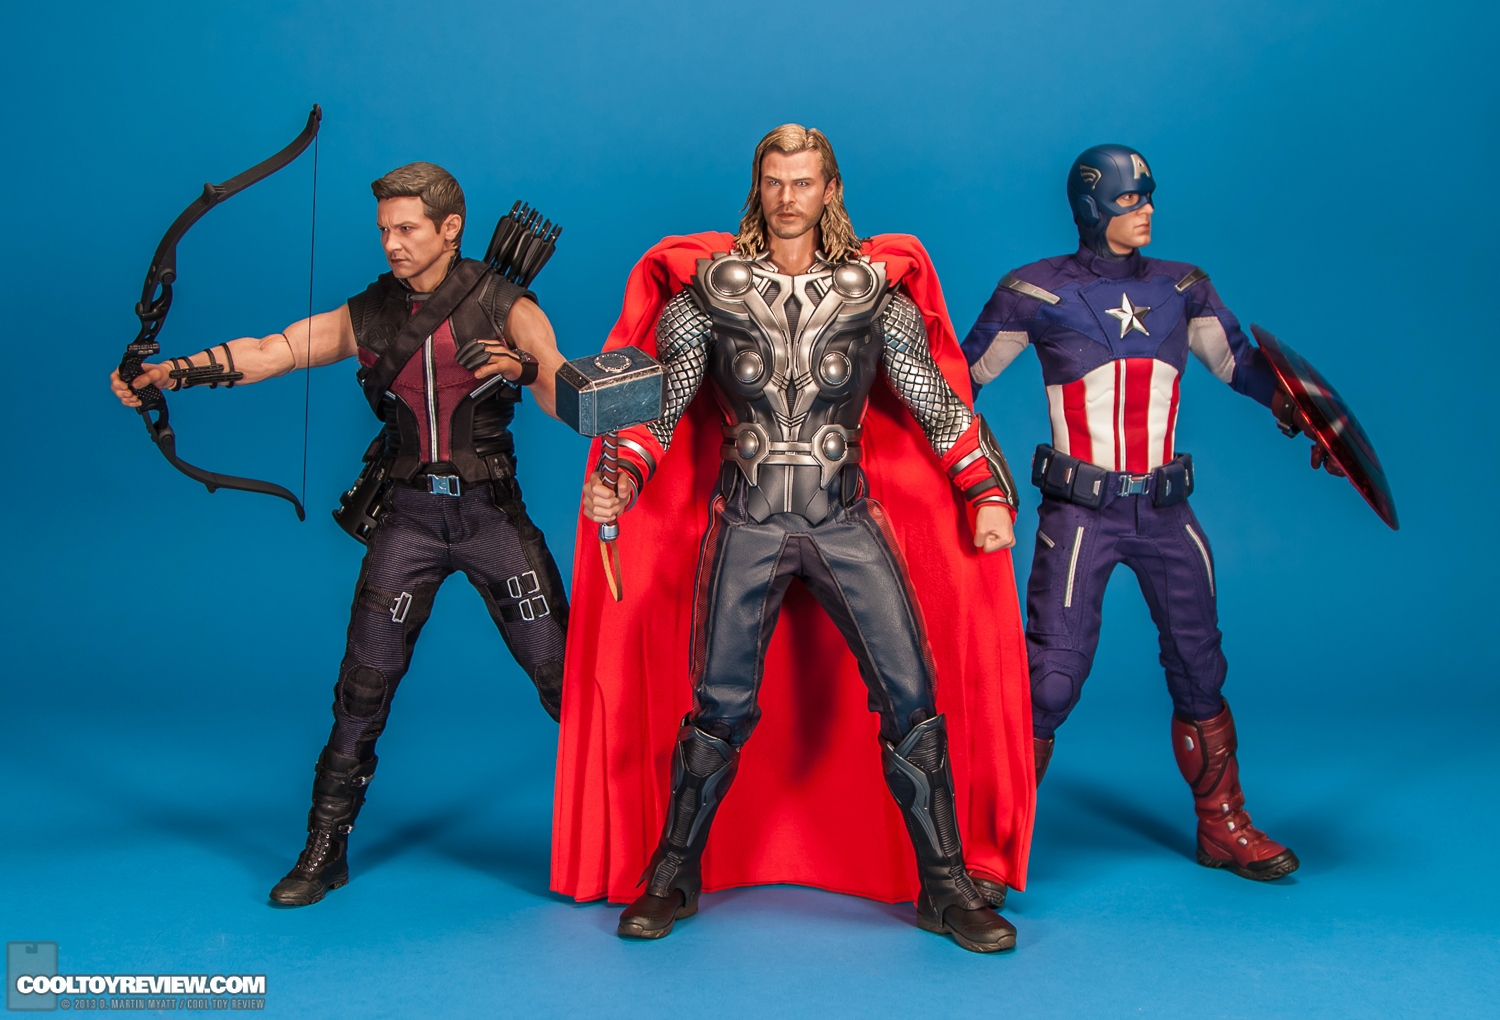 Hot_Toys_Thor_Avengers_Movie_Masterpiece_Series-28.jpg